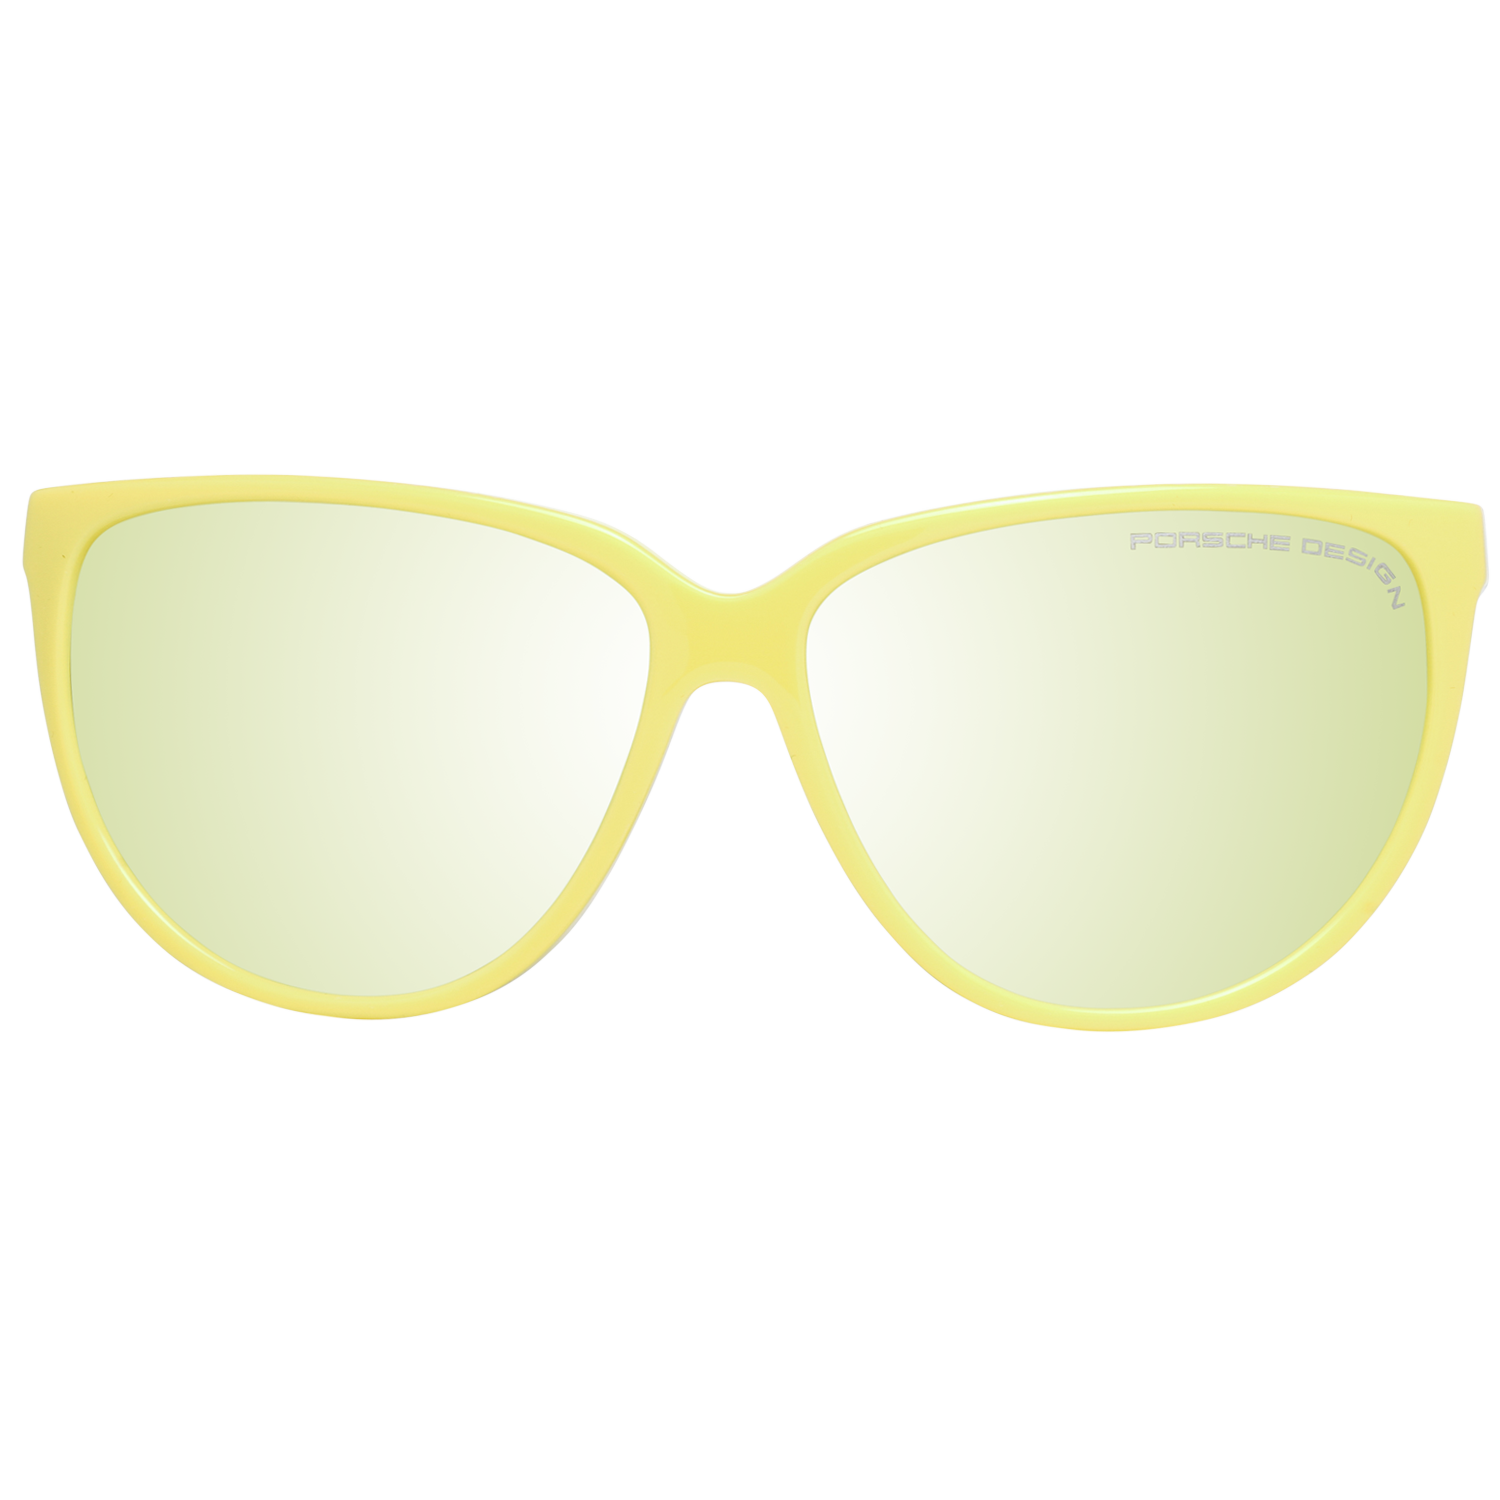 Porsche Design Sunglasses Porsche Design Sunglasses P8588 C 61 Eyeglasses Eyewear UK USA Australia 